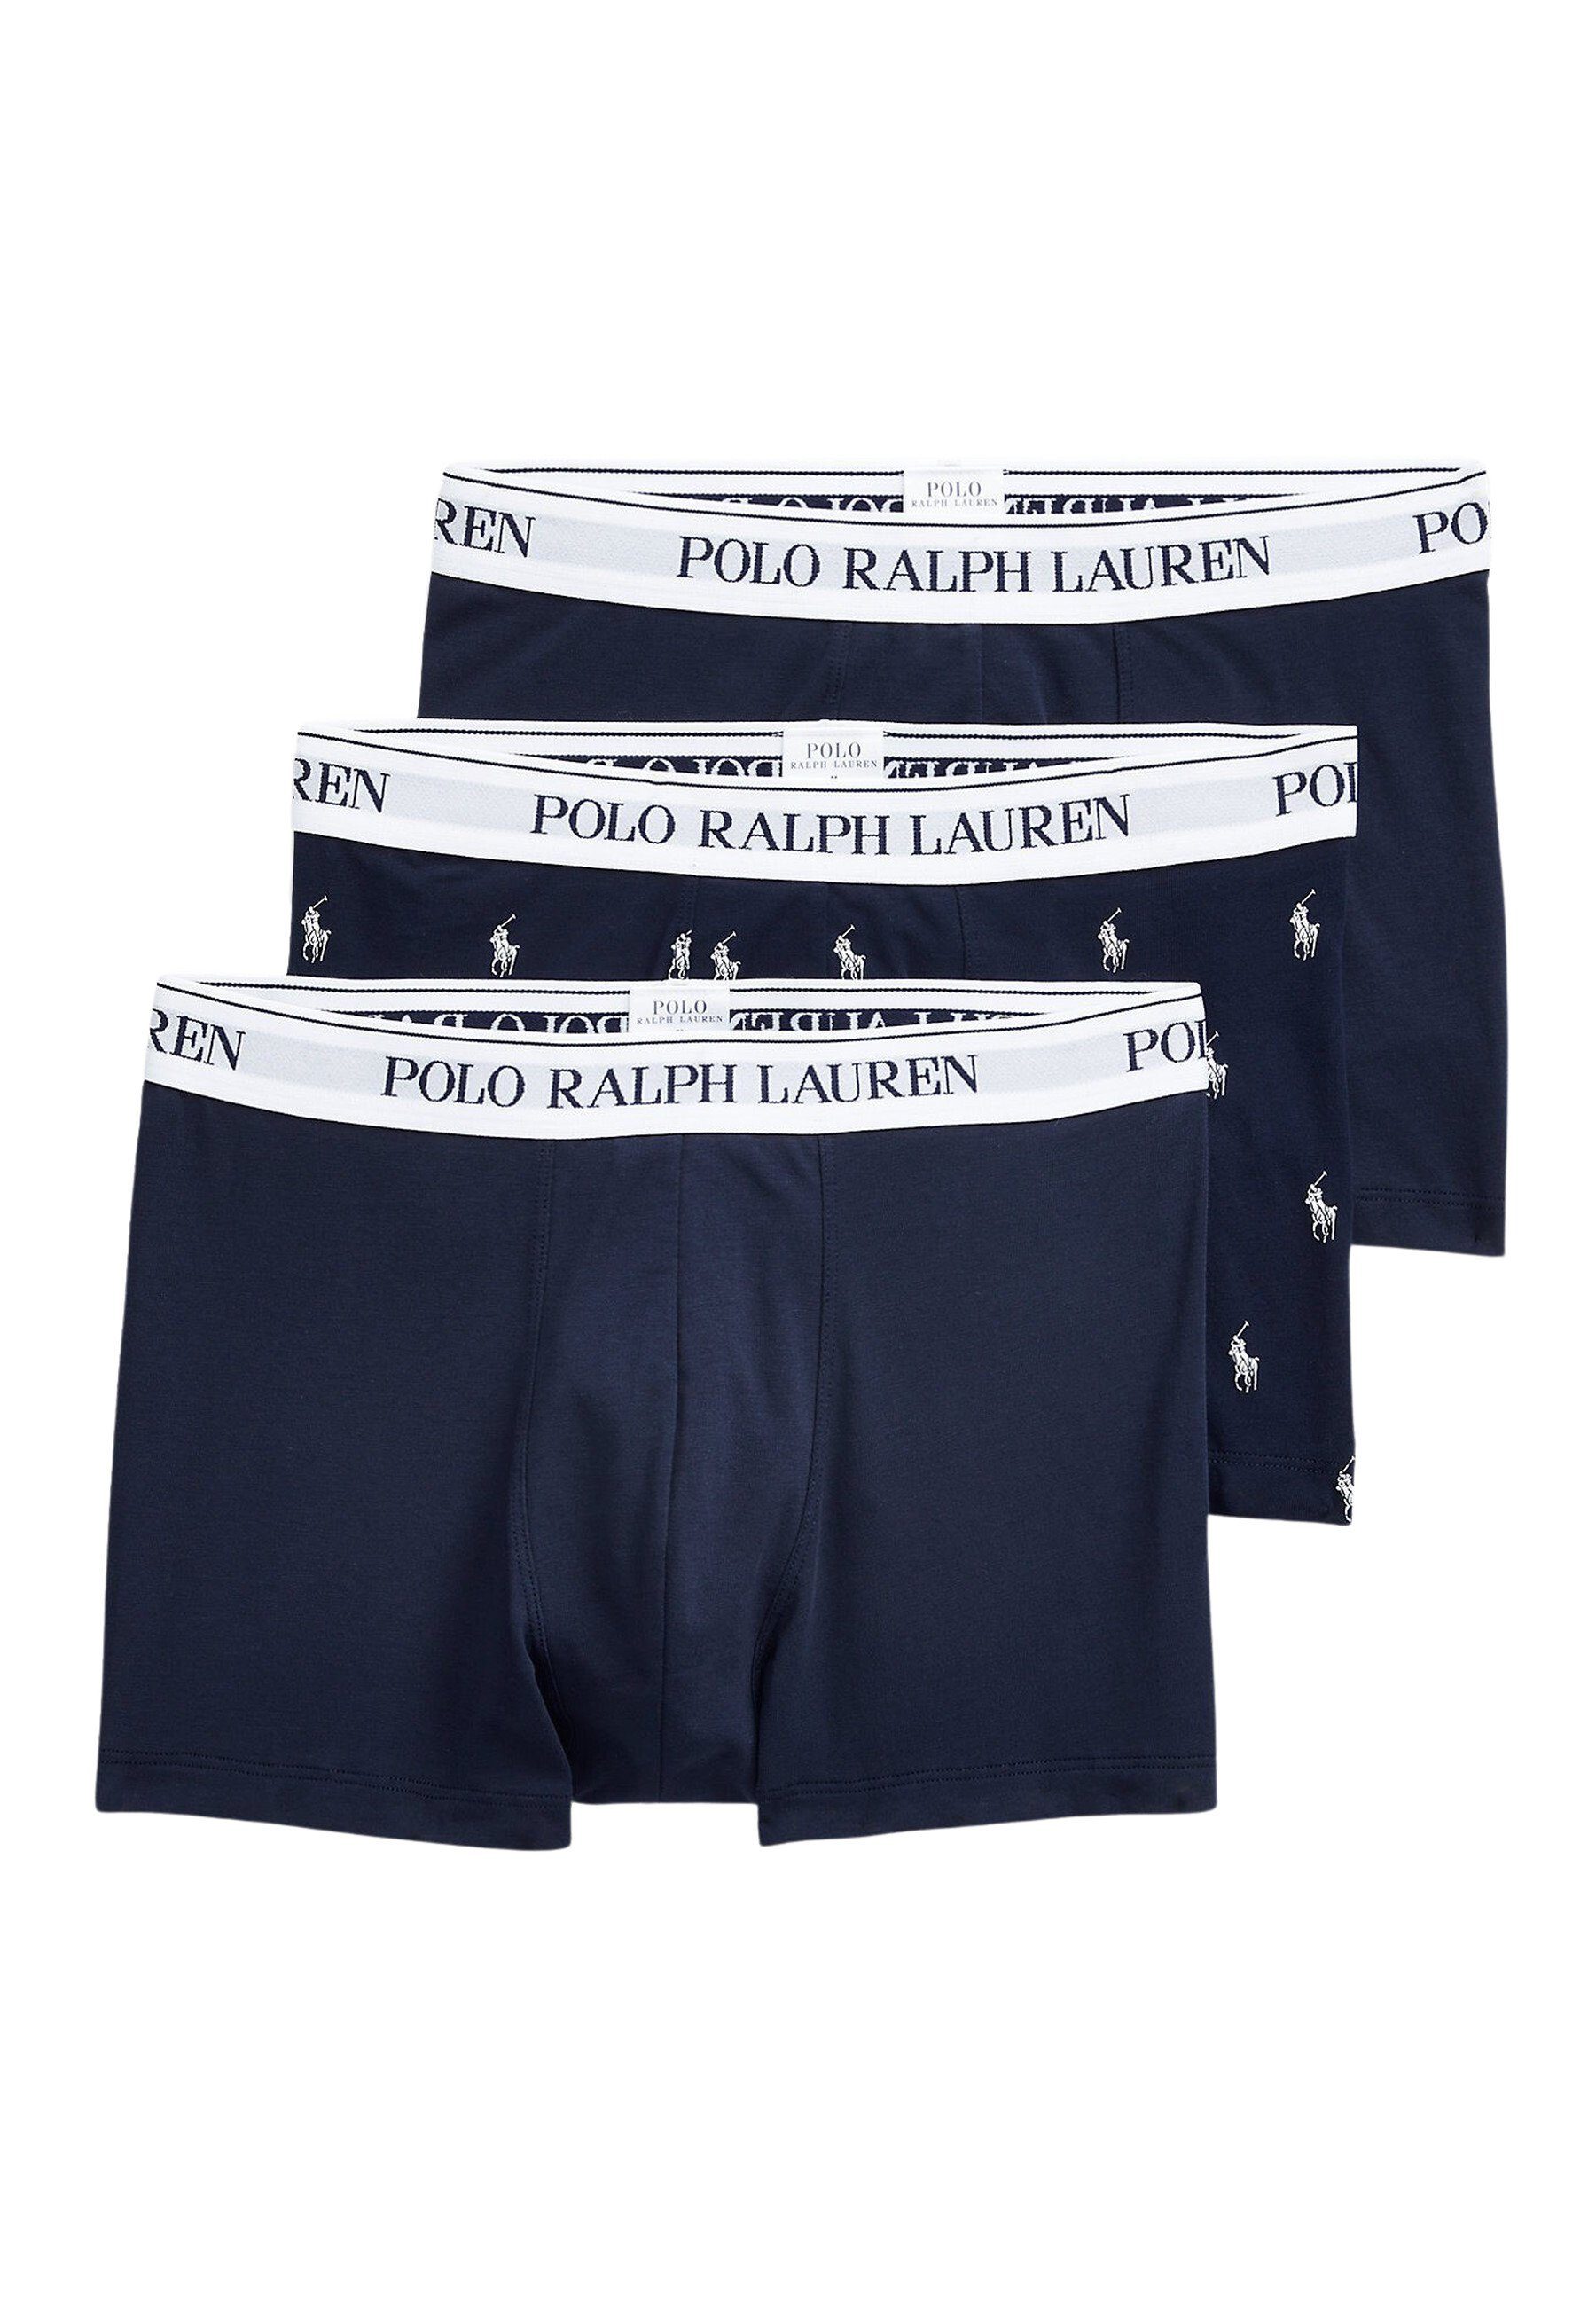 Polo Ralph Lauren Ralph Lauren Boxershorts Boxershorts Spring Start SHP 4 Trunks Dreierpack (3-St) Dunkelblau/Muster